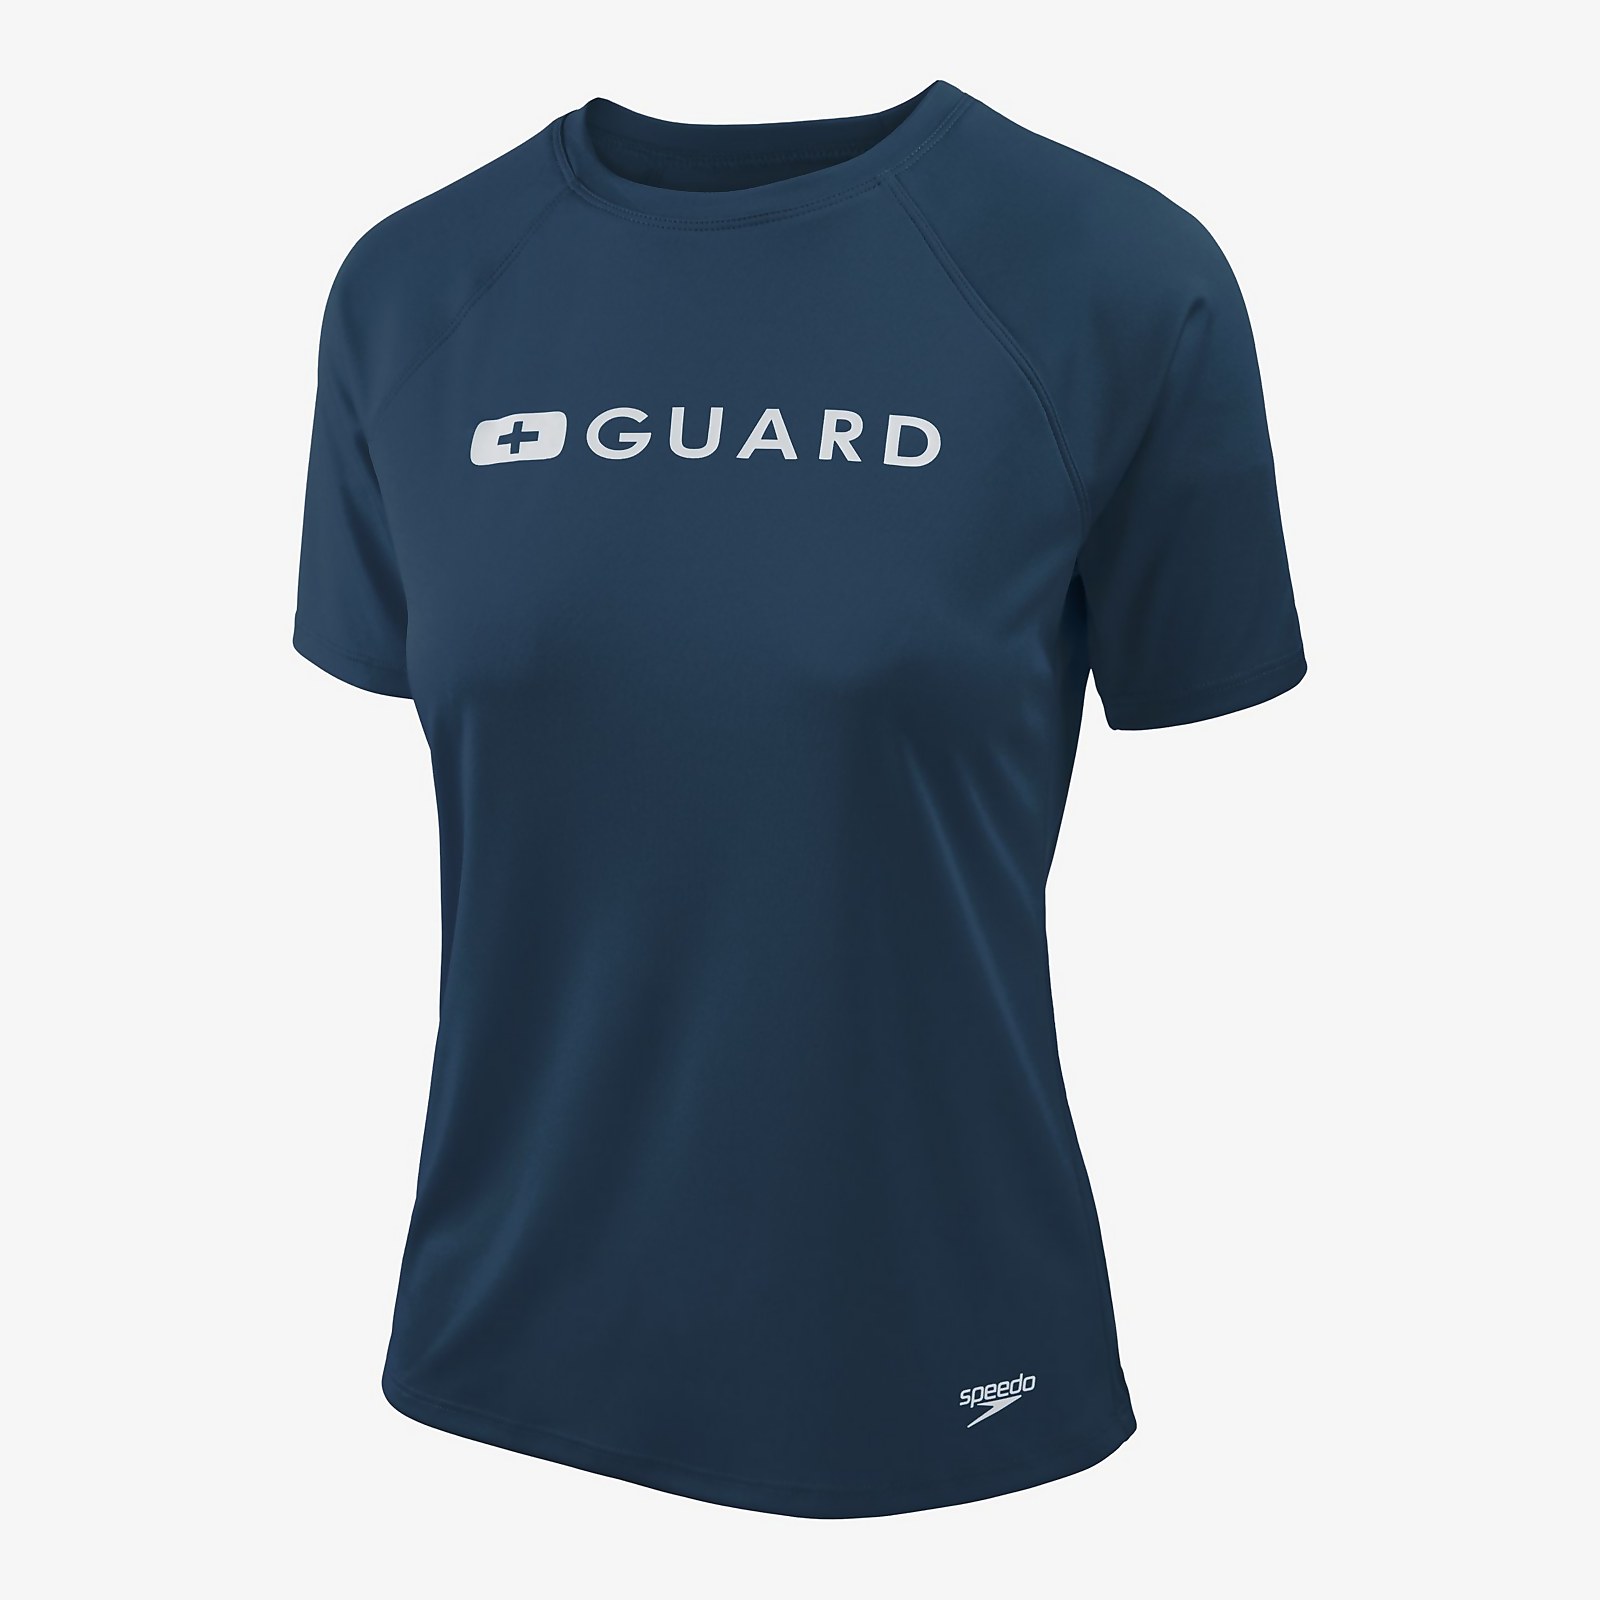 Speedo  Guard Short Sleeve Solid Swim Tee - L    : Navy